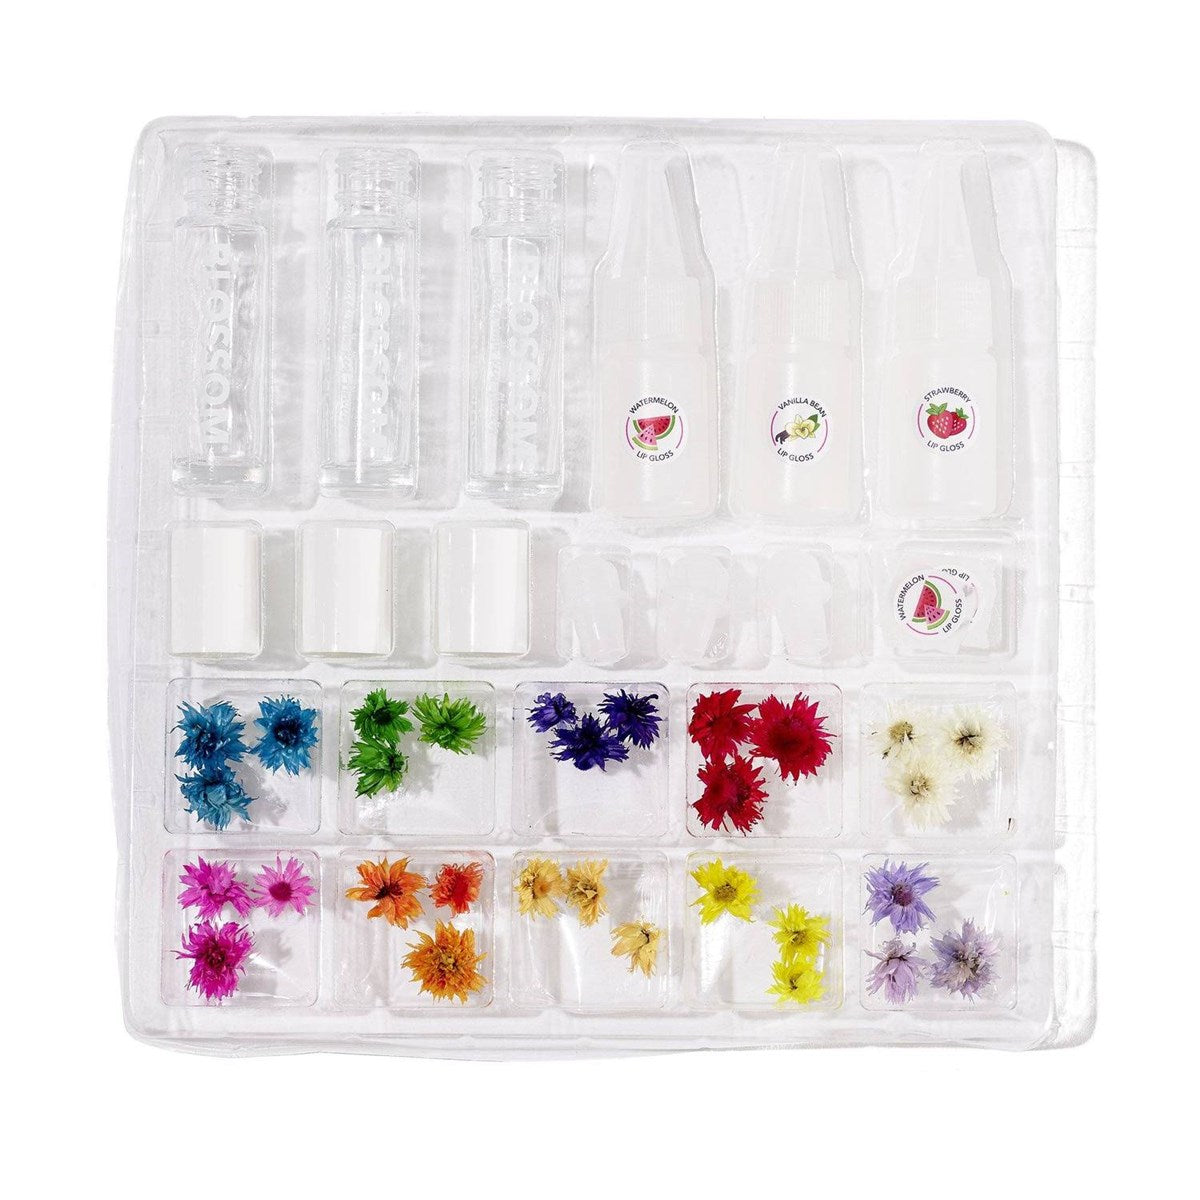 Blossom Make-Your-Own Lip Gloss Kit